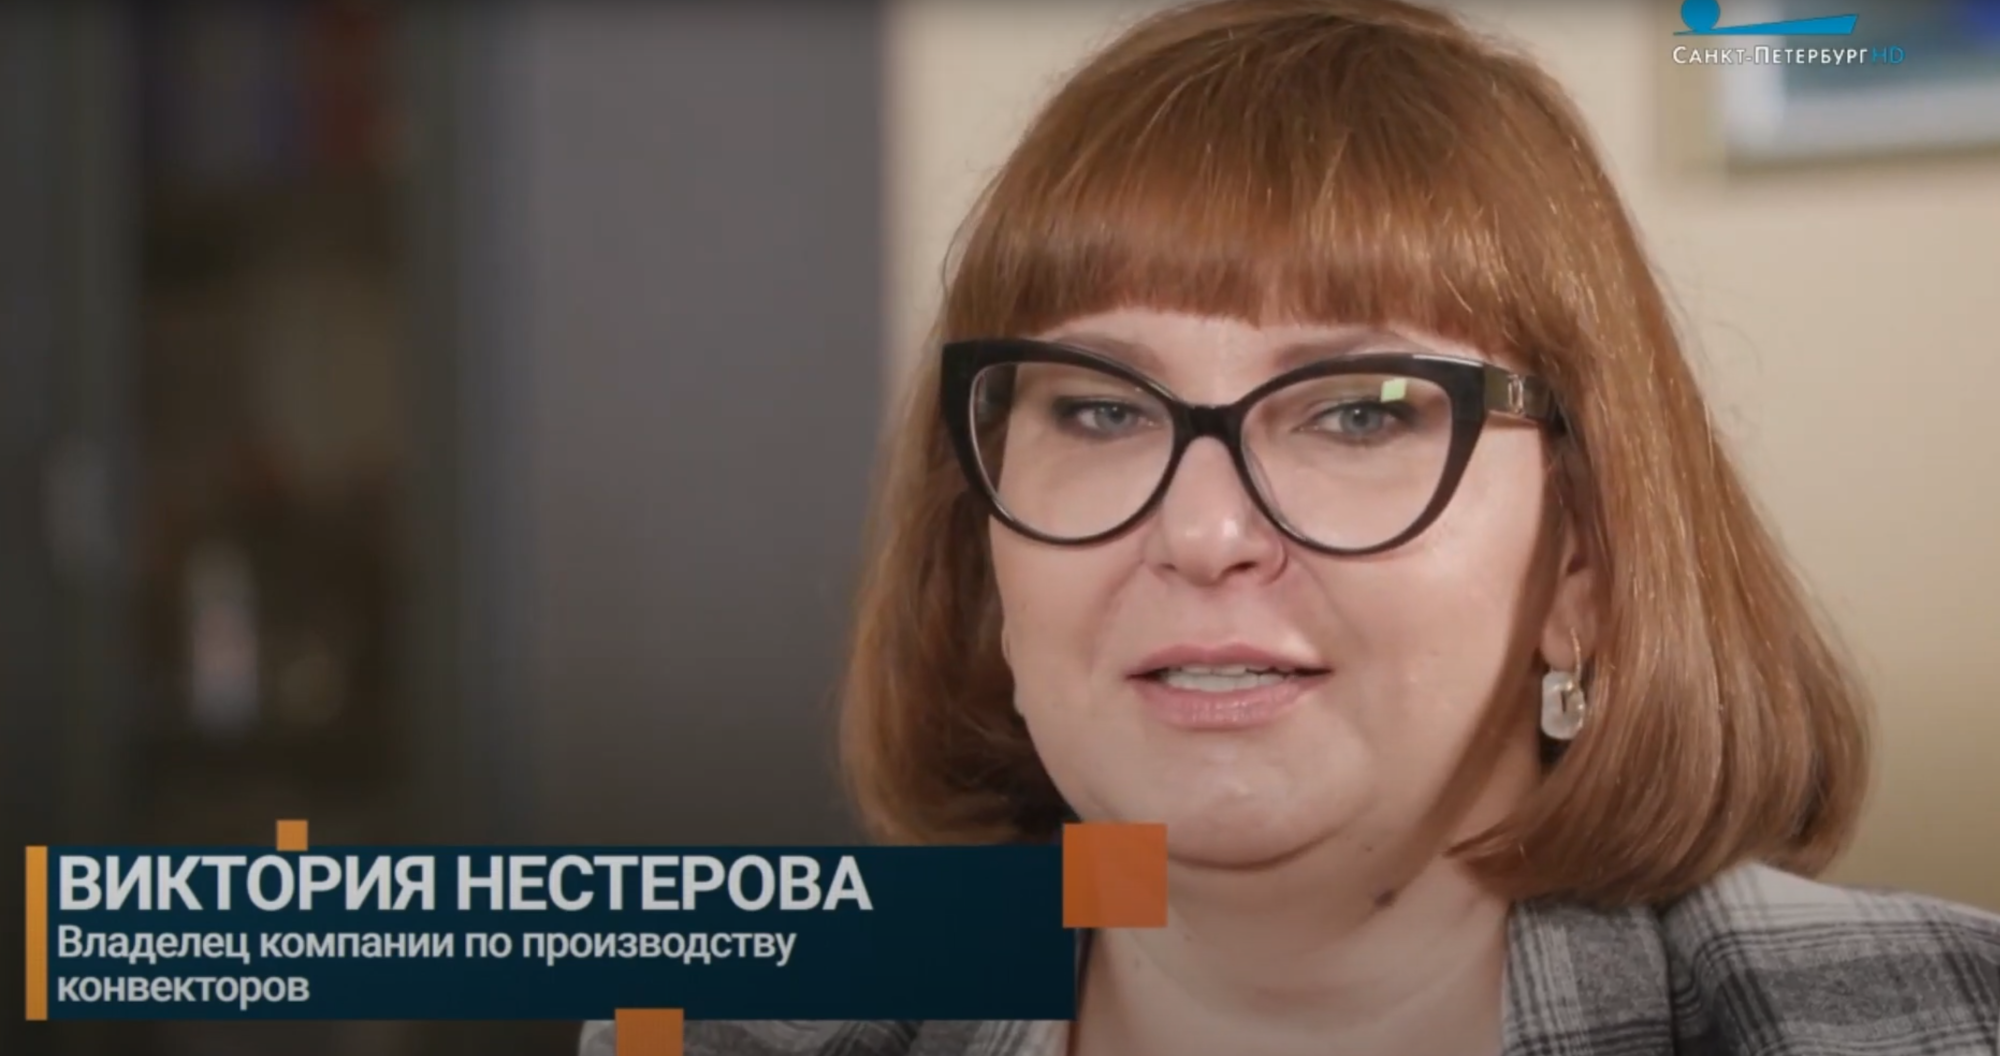 Нестерова Виктория в программе "Залог Успеха" на телеканале "Санкт-Петербург"